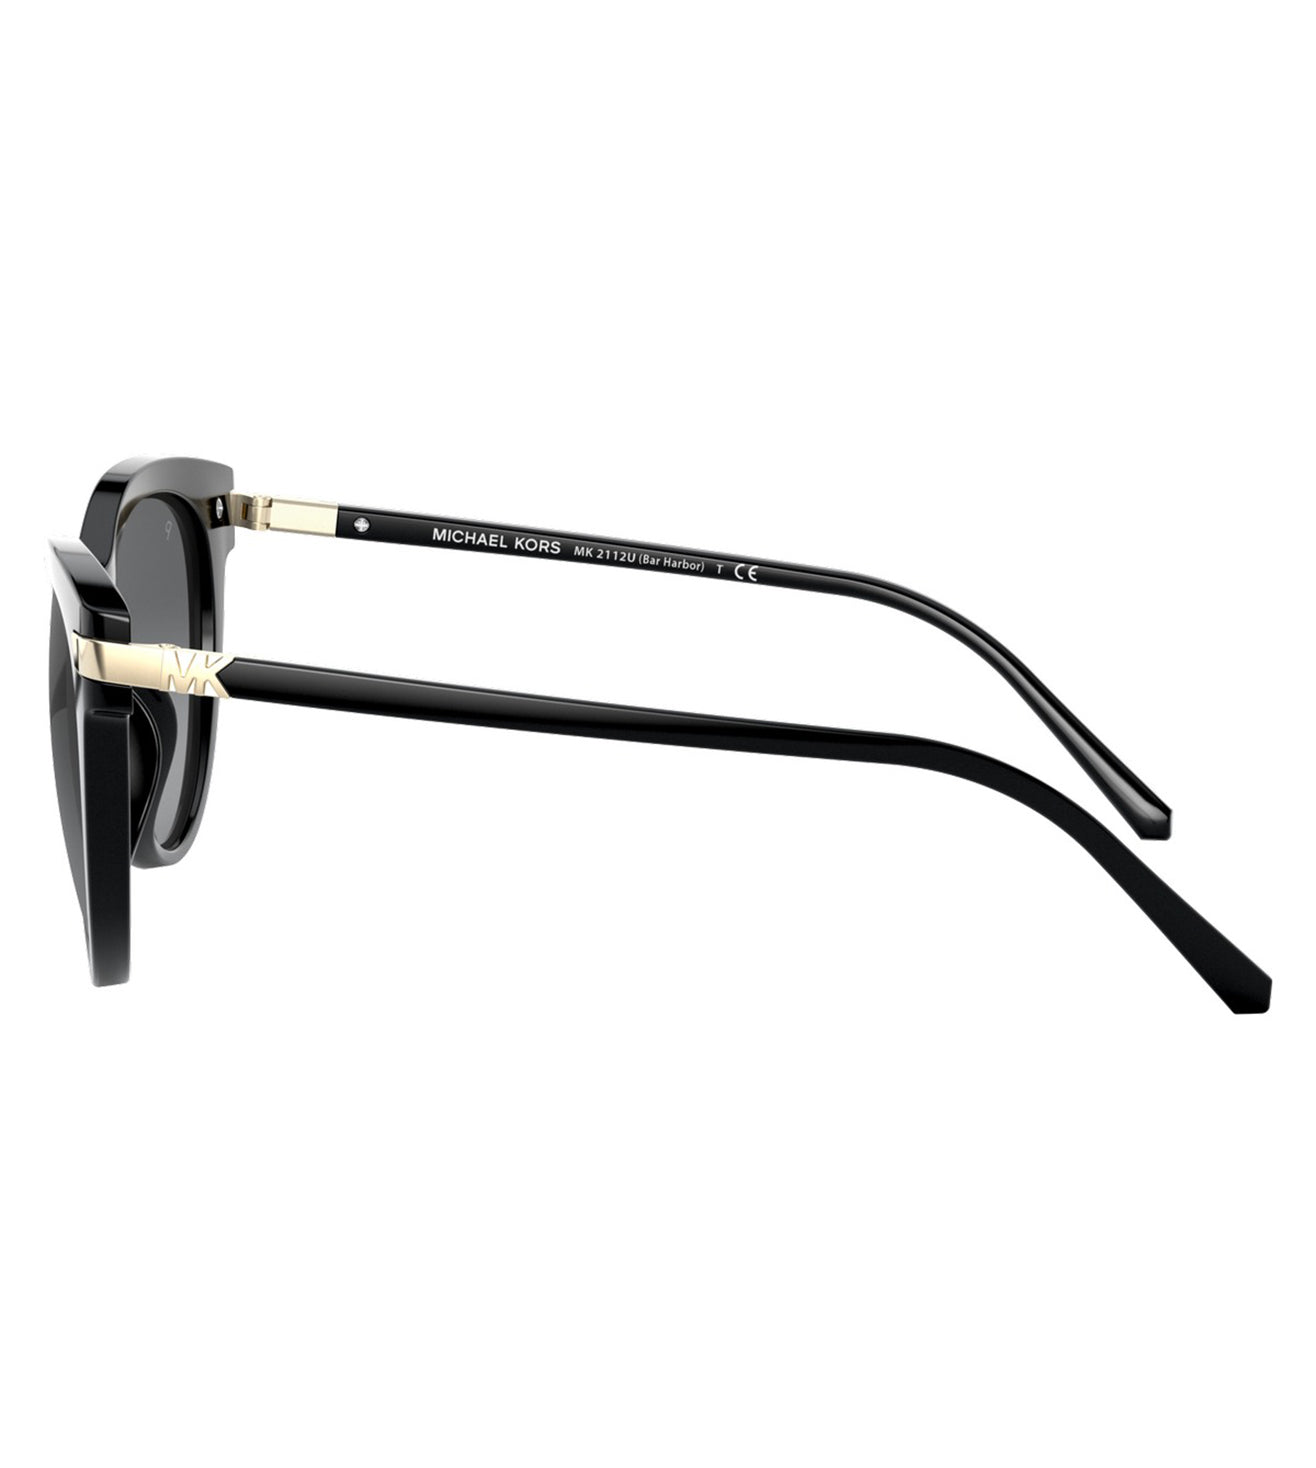 Michael Kors Women's Gray Gradient Cat-eye Sunglasses